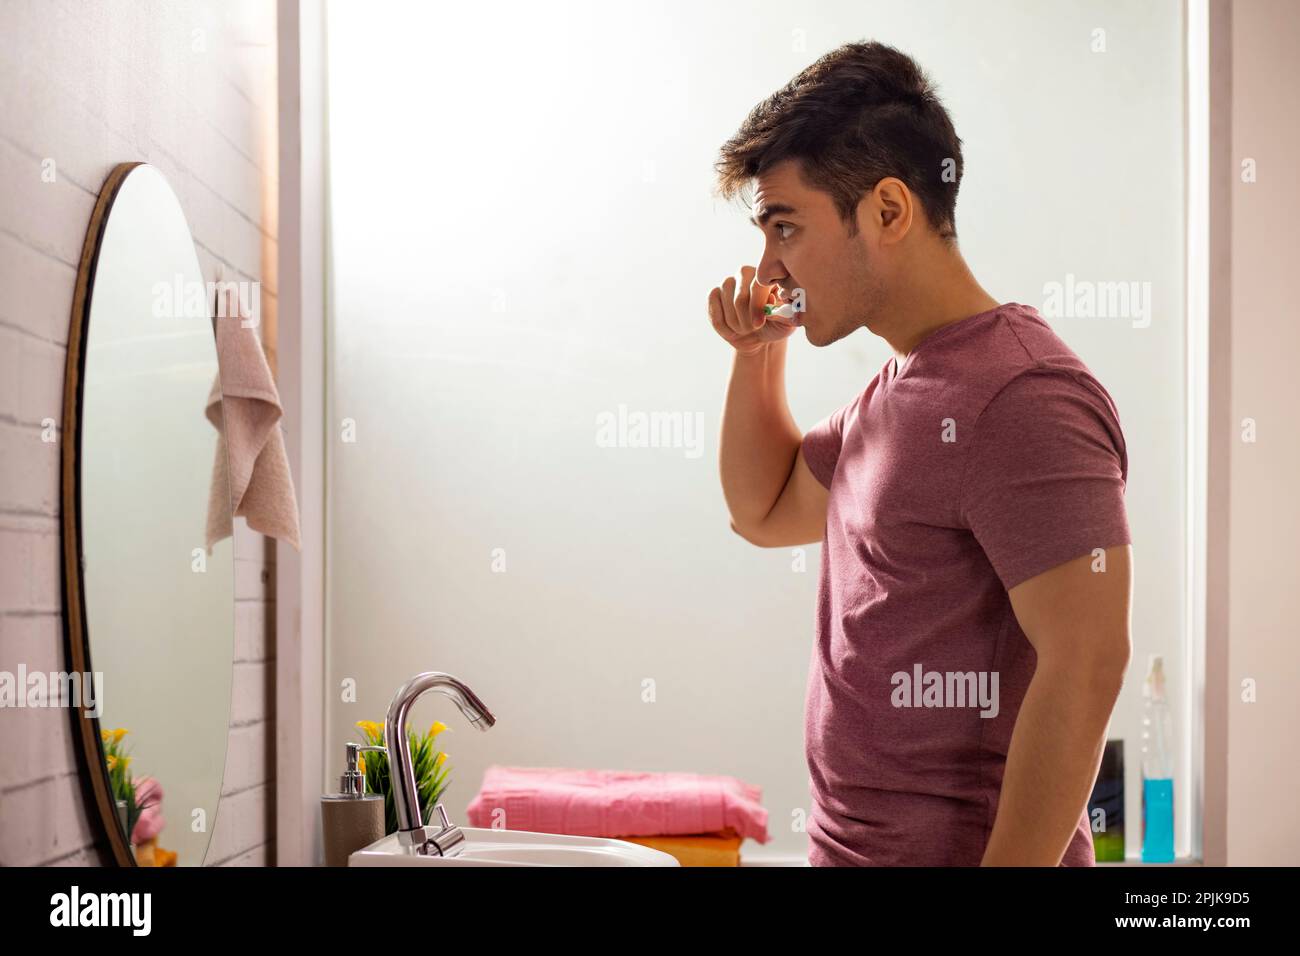 Young man brushing his teeth in bathroom Stock Photo